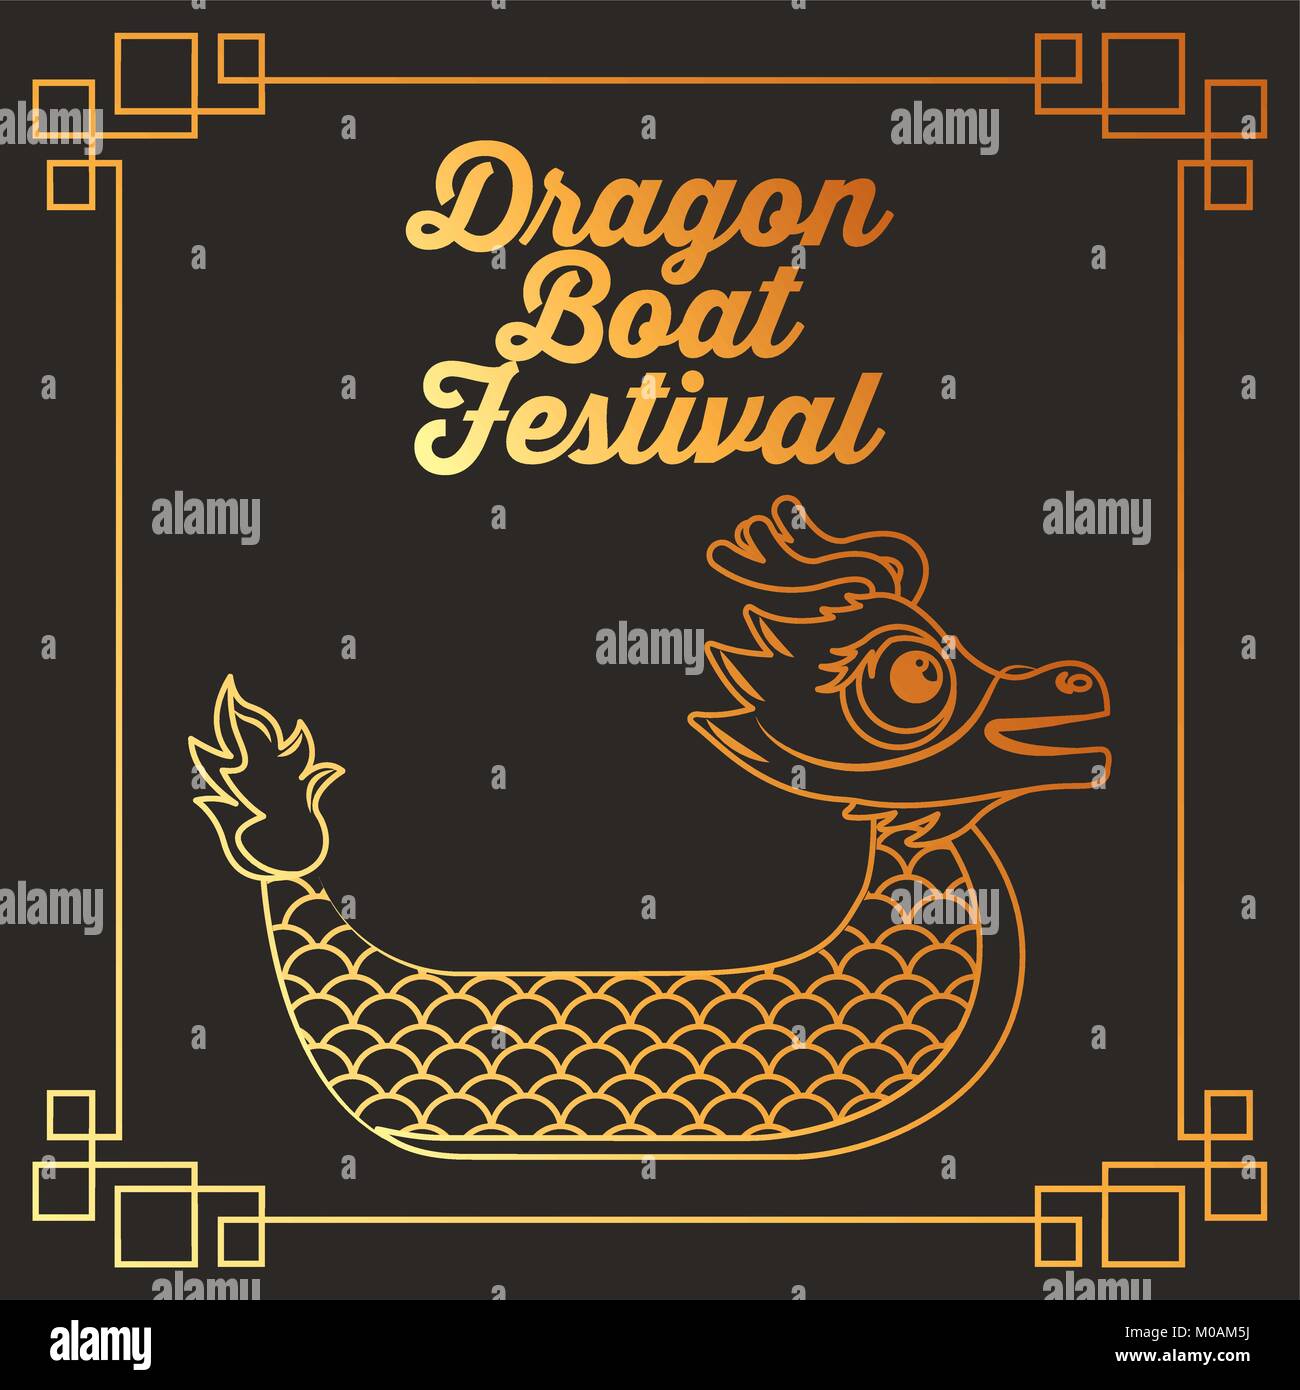 dragon boat festival golden text frame decoration Stock Vector